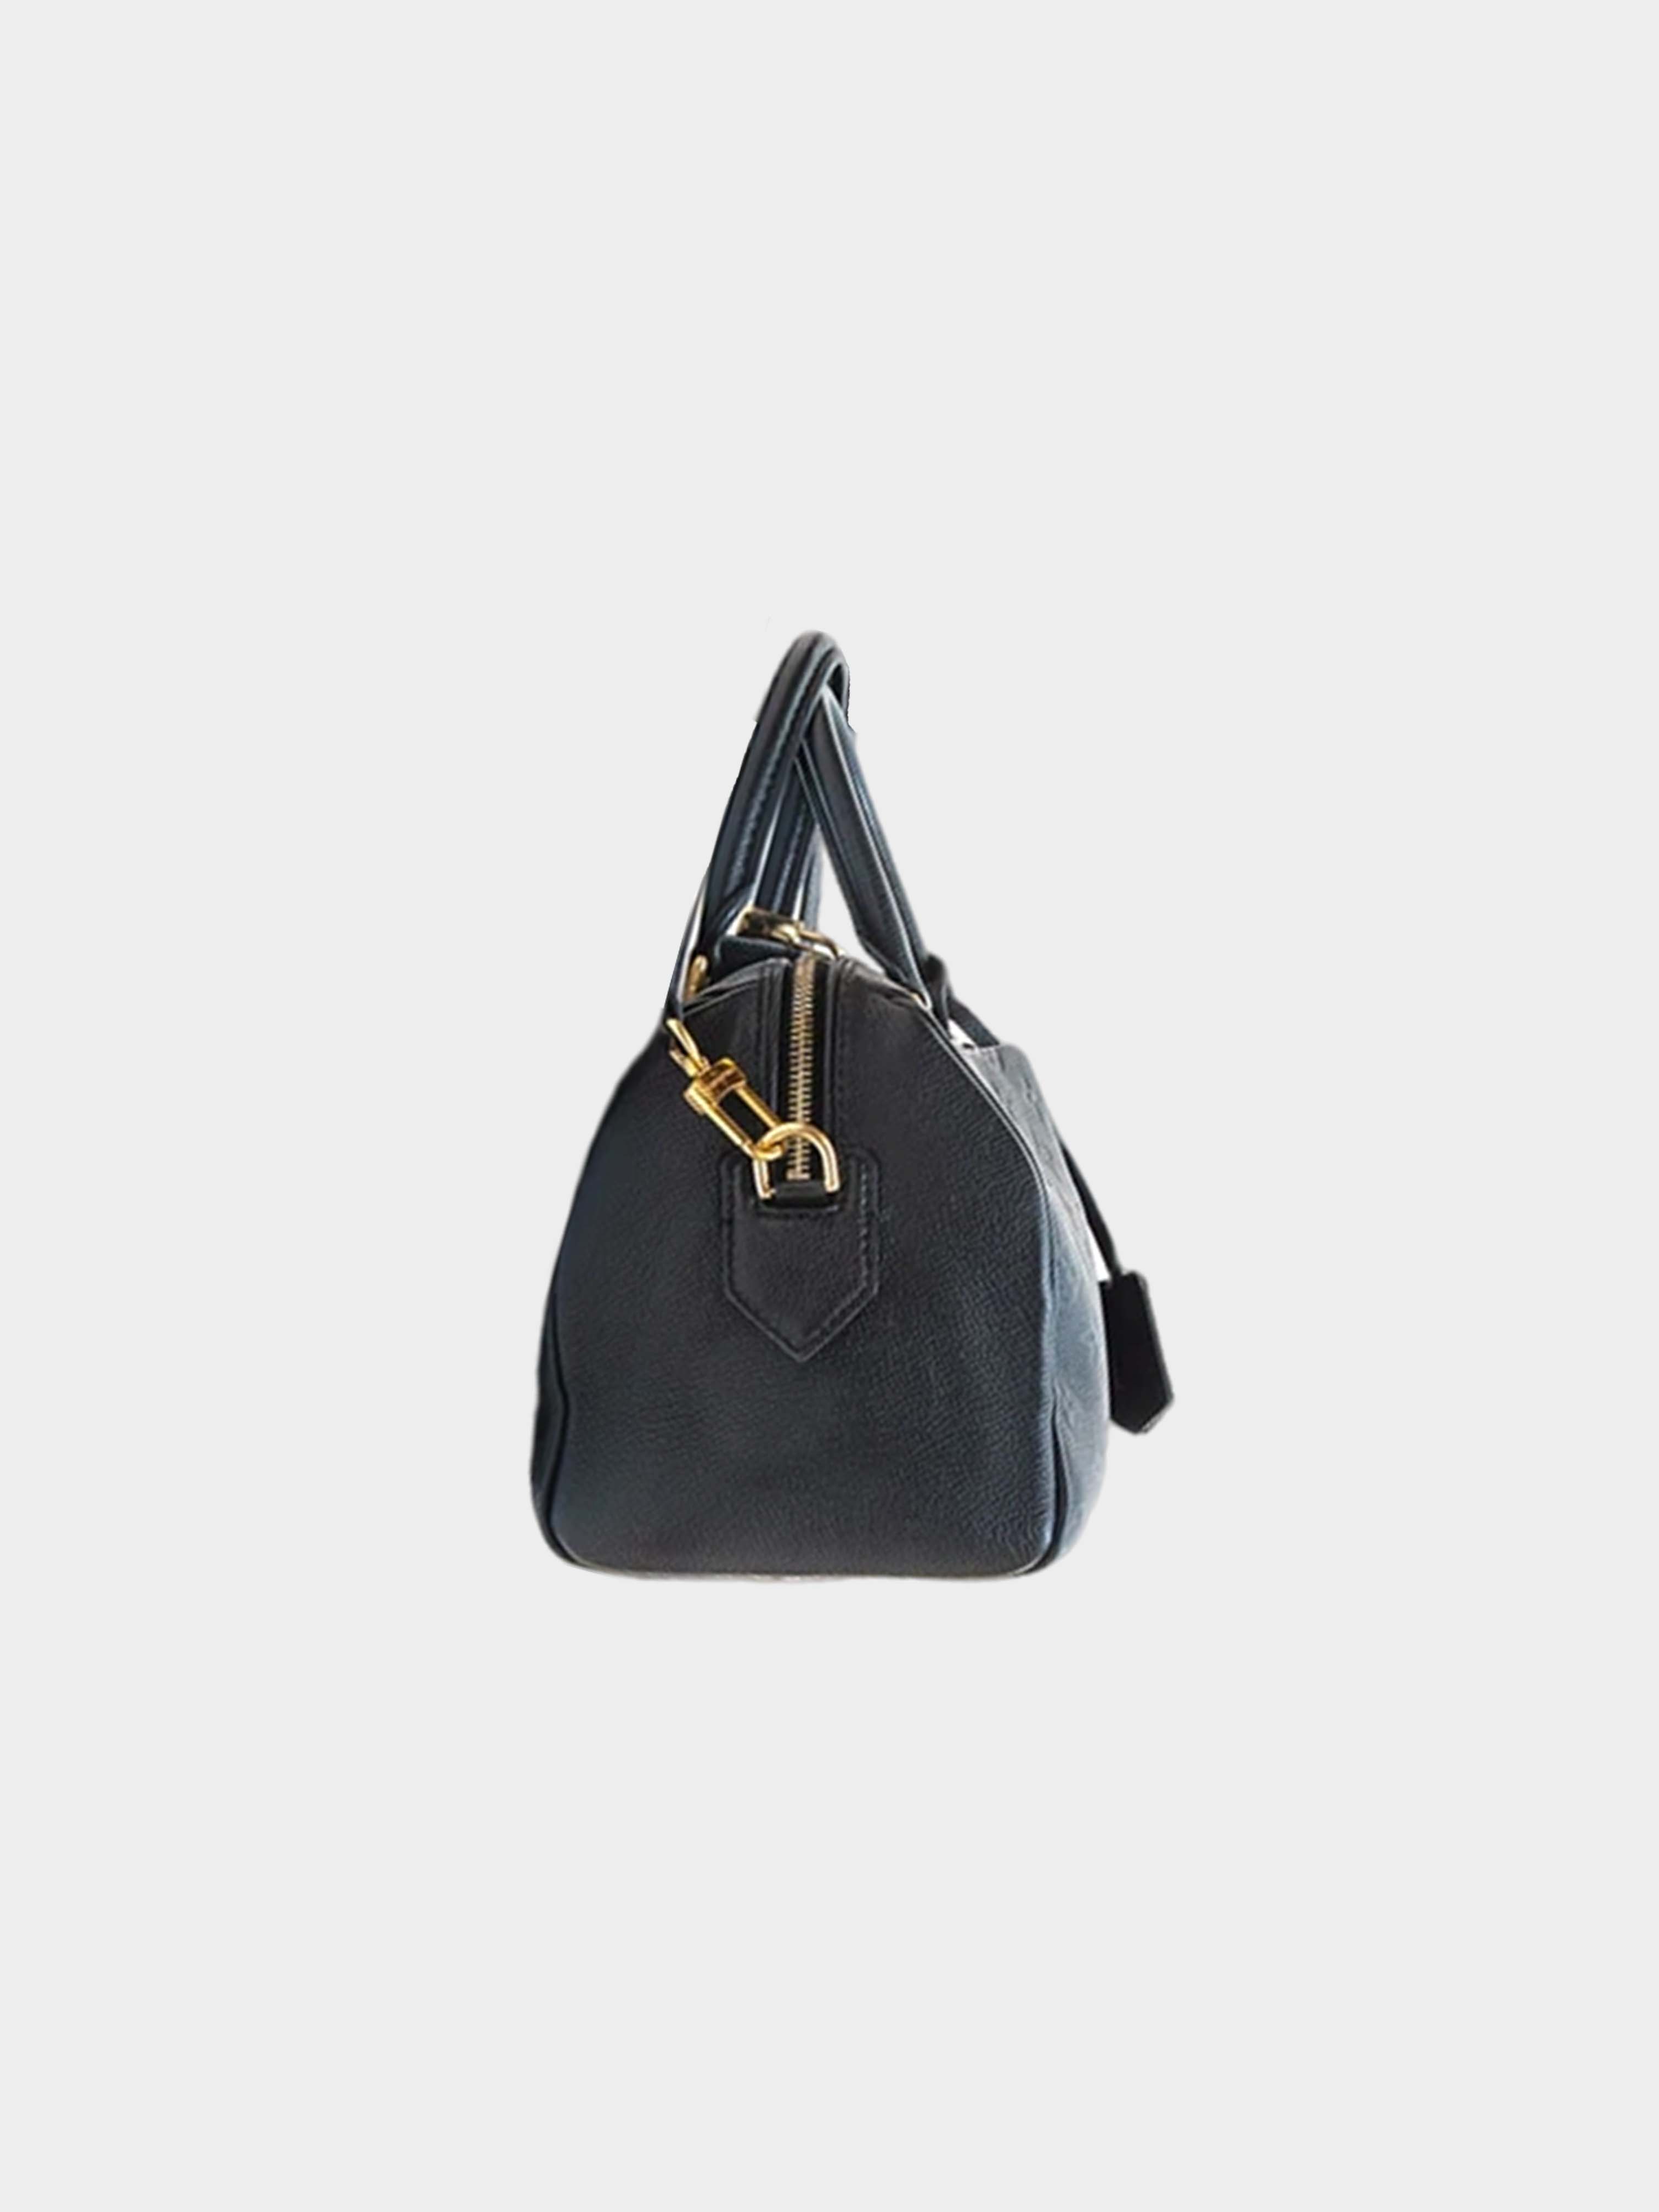 Louis Vuitton 2017 Black Speedy Bandouliere Handbag